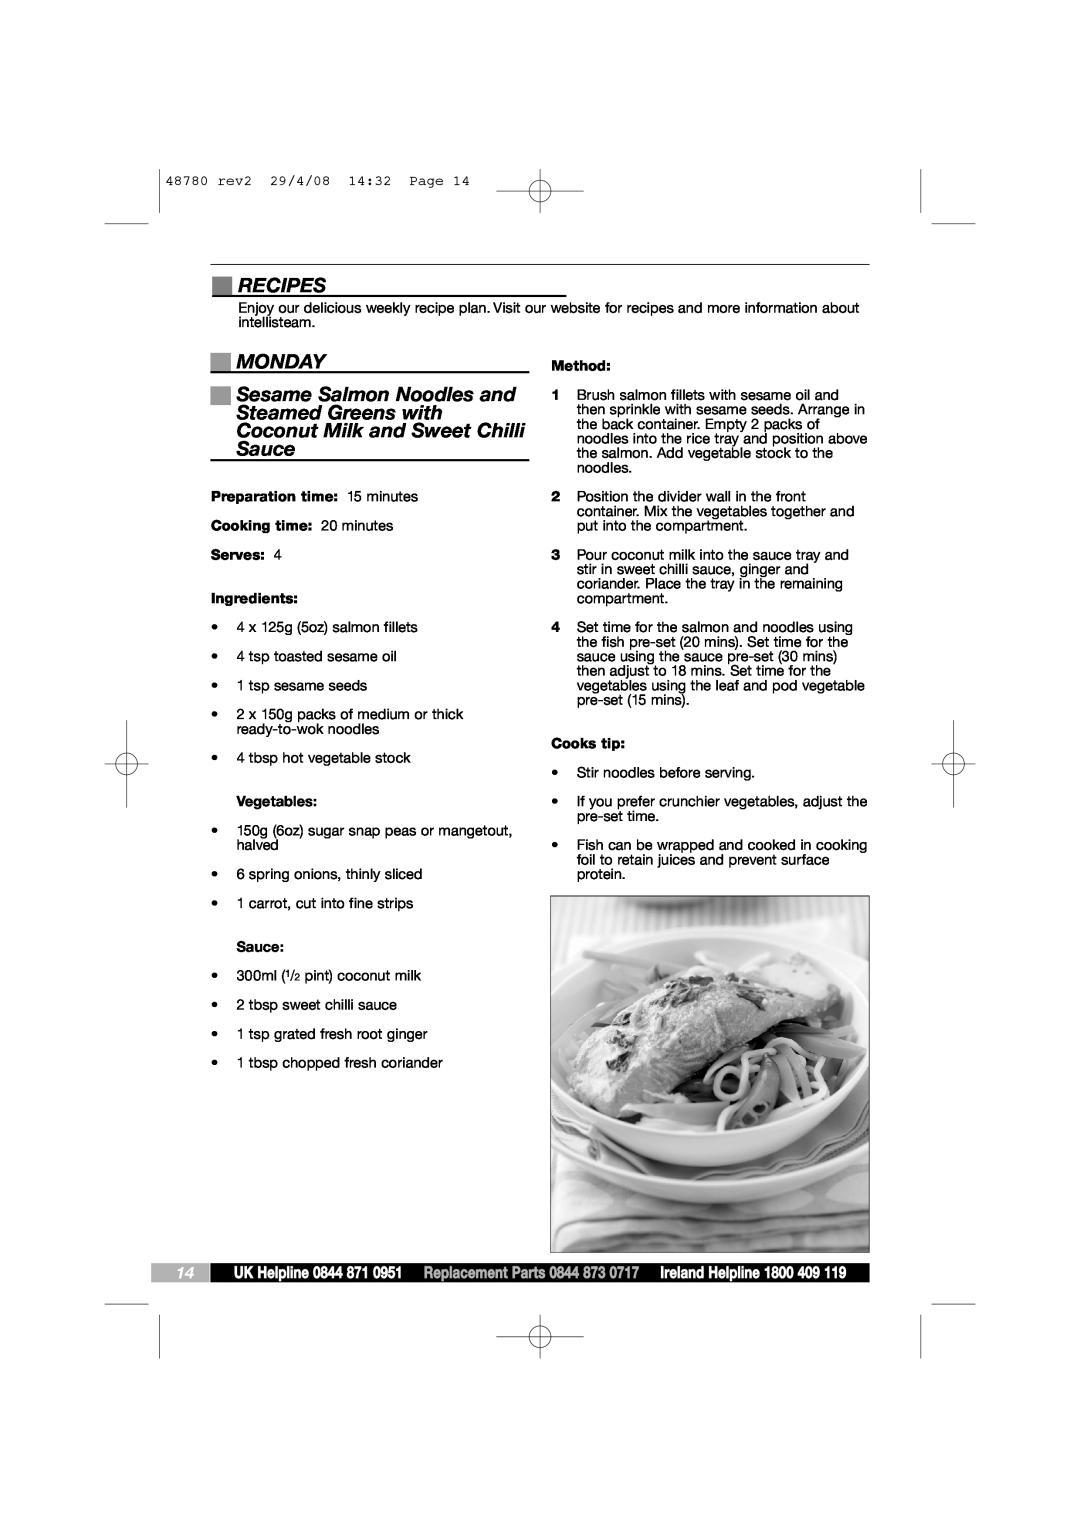 Morphy Richards Intellisteam setup guide Recipes, Monday, Vegetables, Sauce 